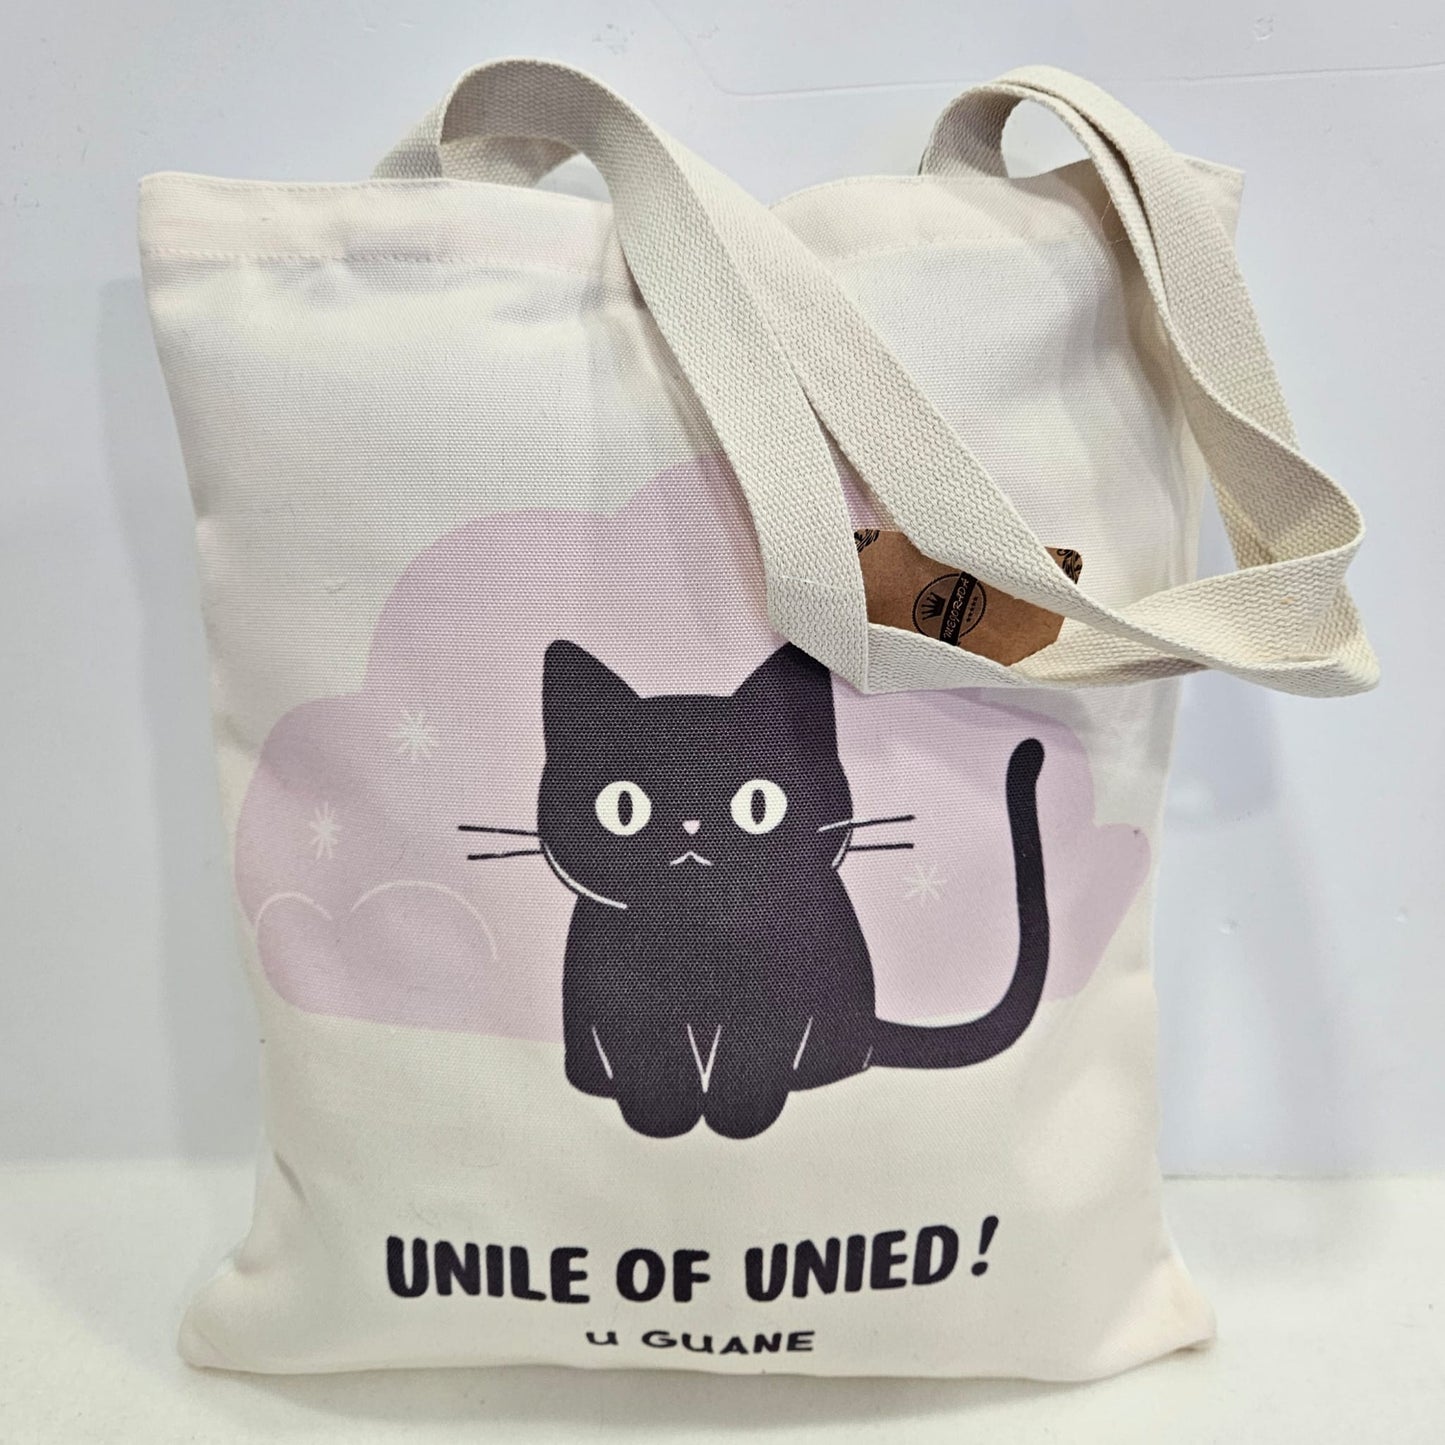 Bolsa tote bag de tela estampado gatito con frase "UNILE OF UNIED!"